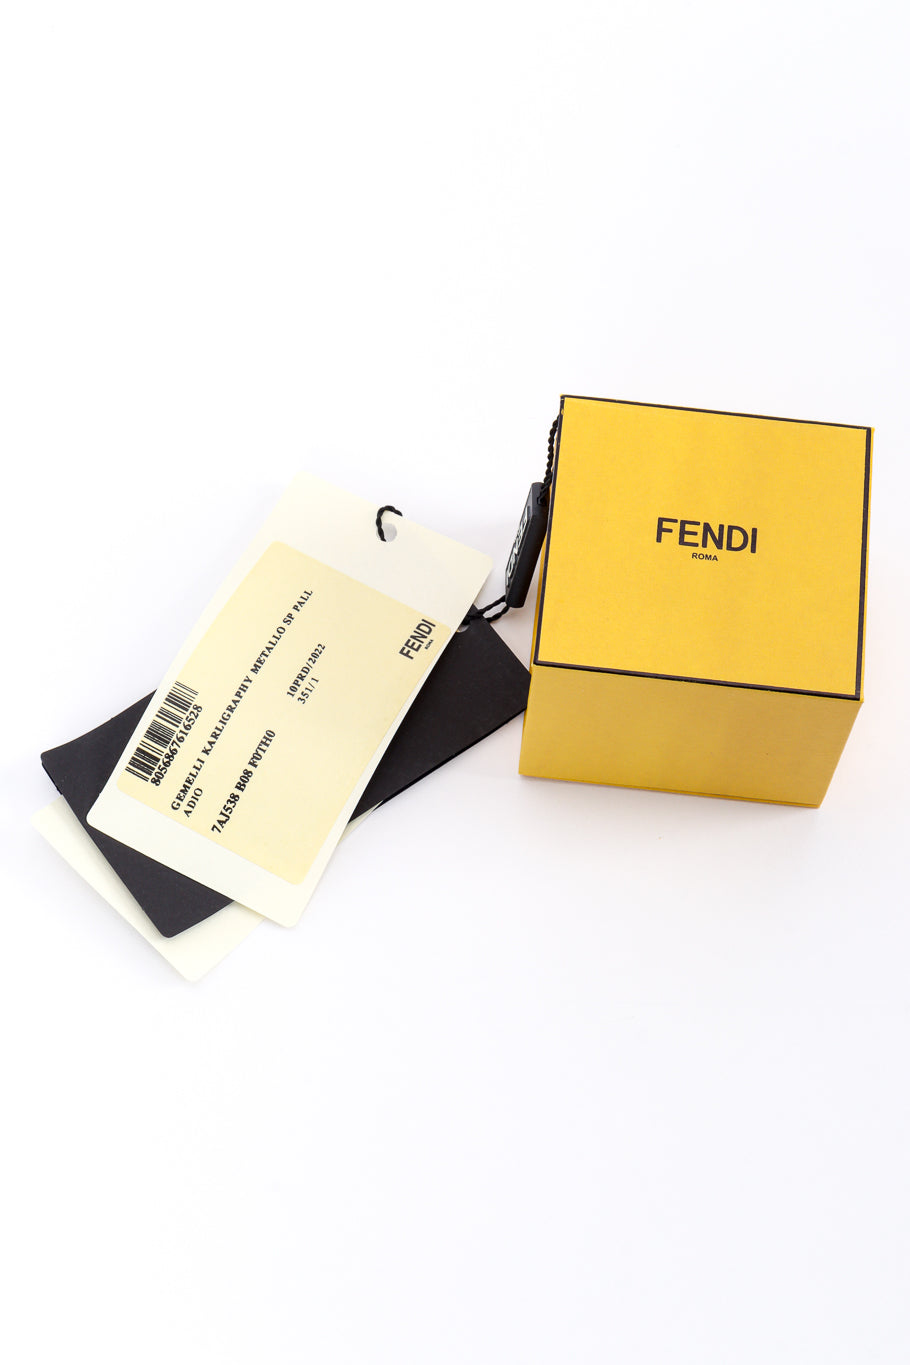 Fendi Karligraphy Logo Cufflinks box and tags @recessla